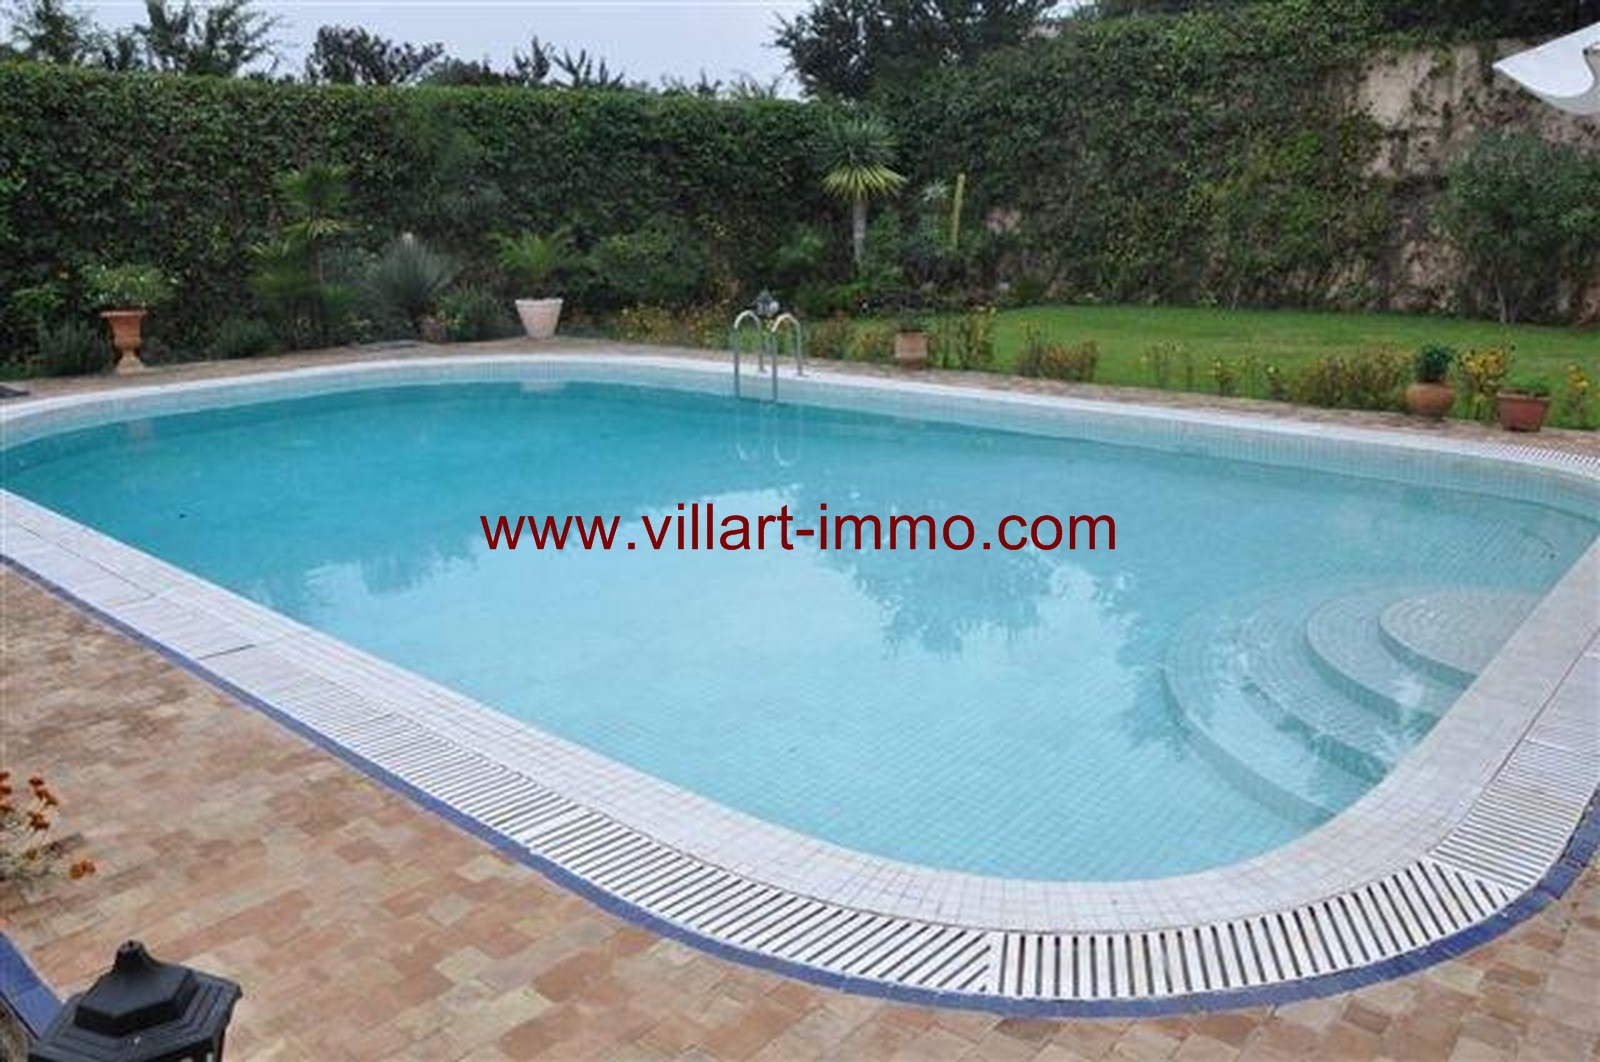 5-vente-villa-tanger-boubana-piscine-vv363-villart-immo